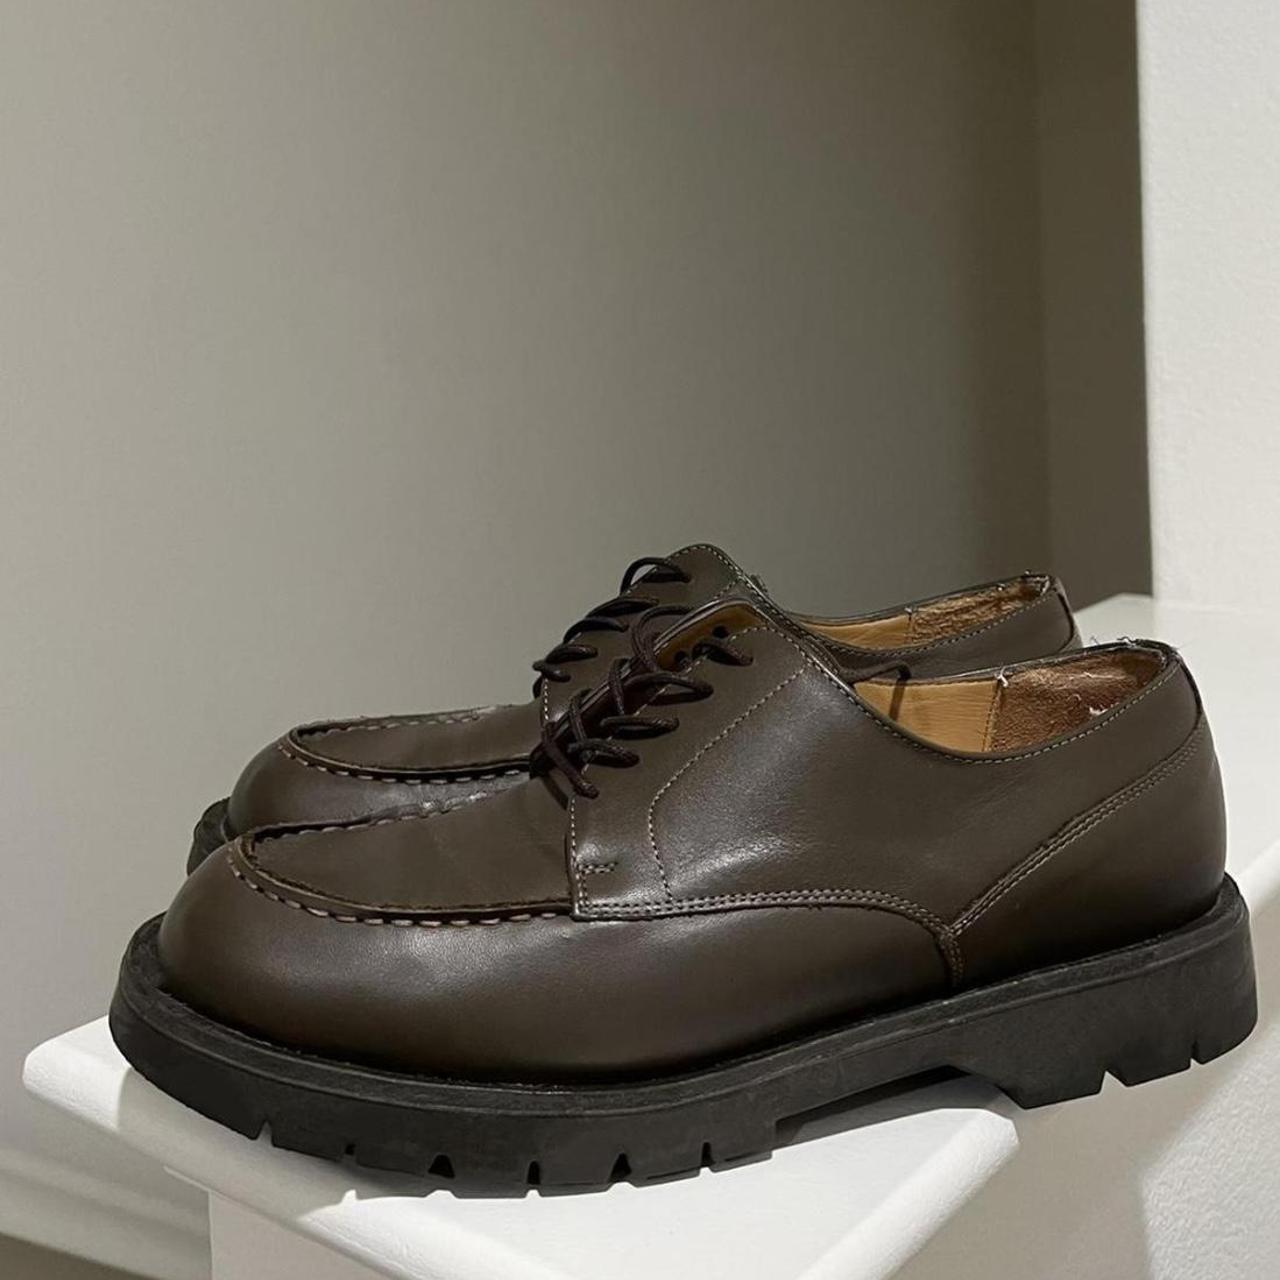 Kleman Frodan Leather Derby “Taupe”. Size 42 (US 9M) - Depop